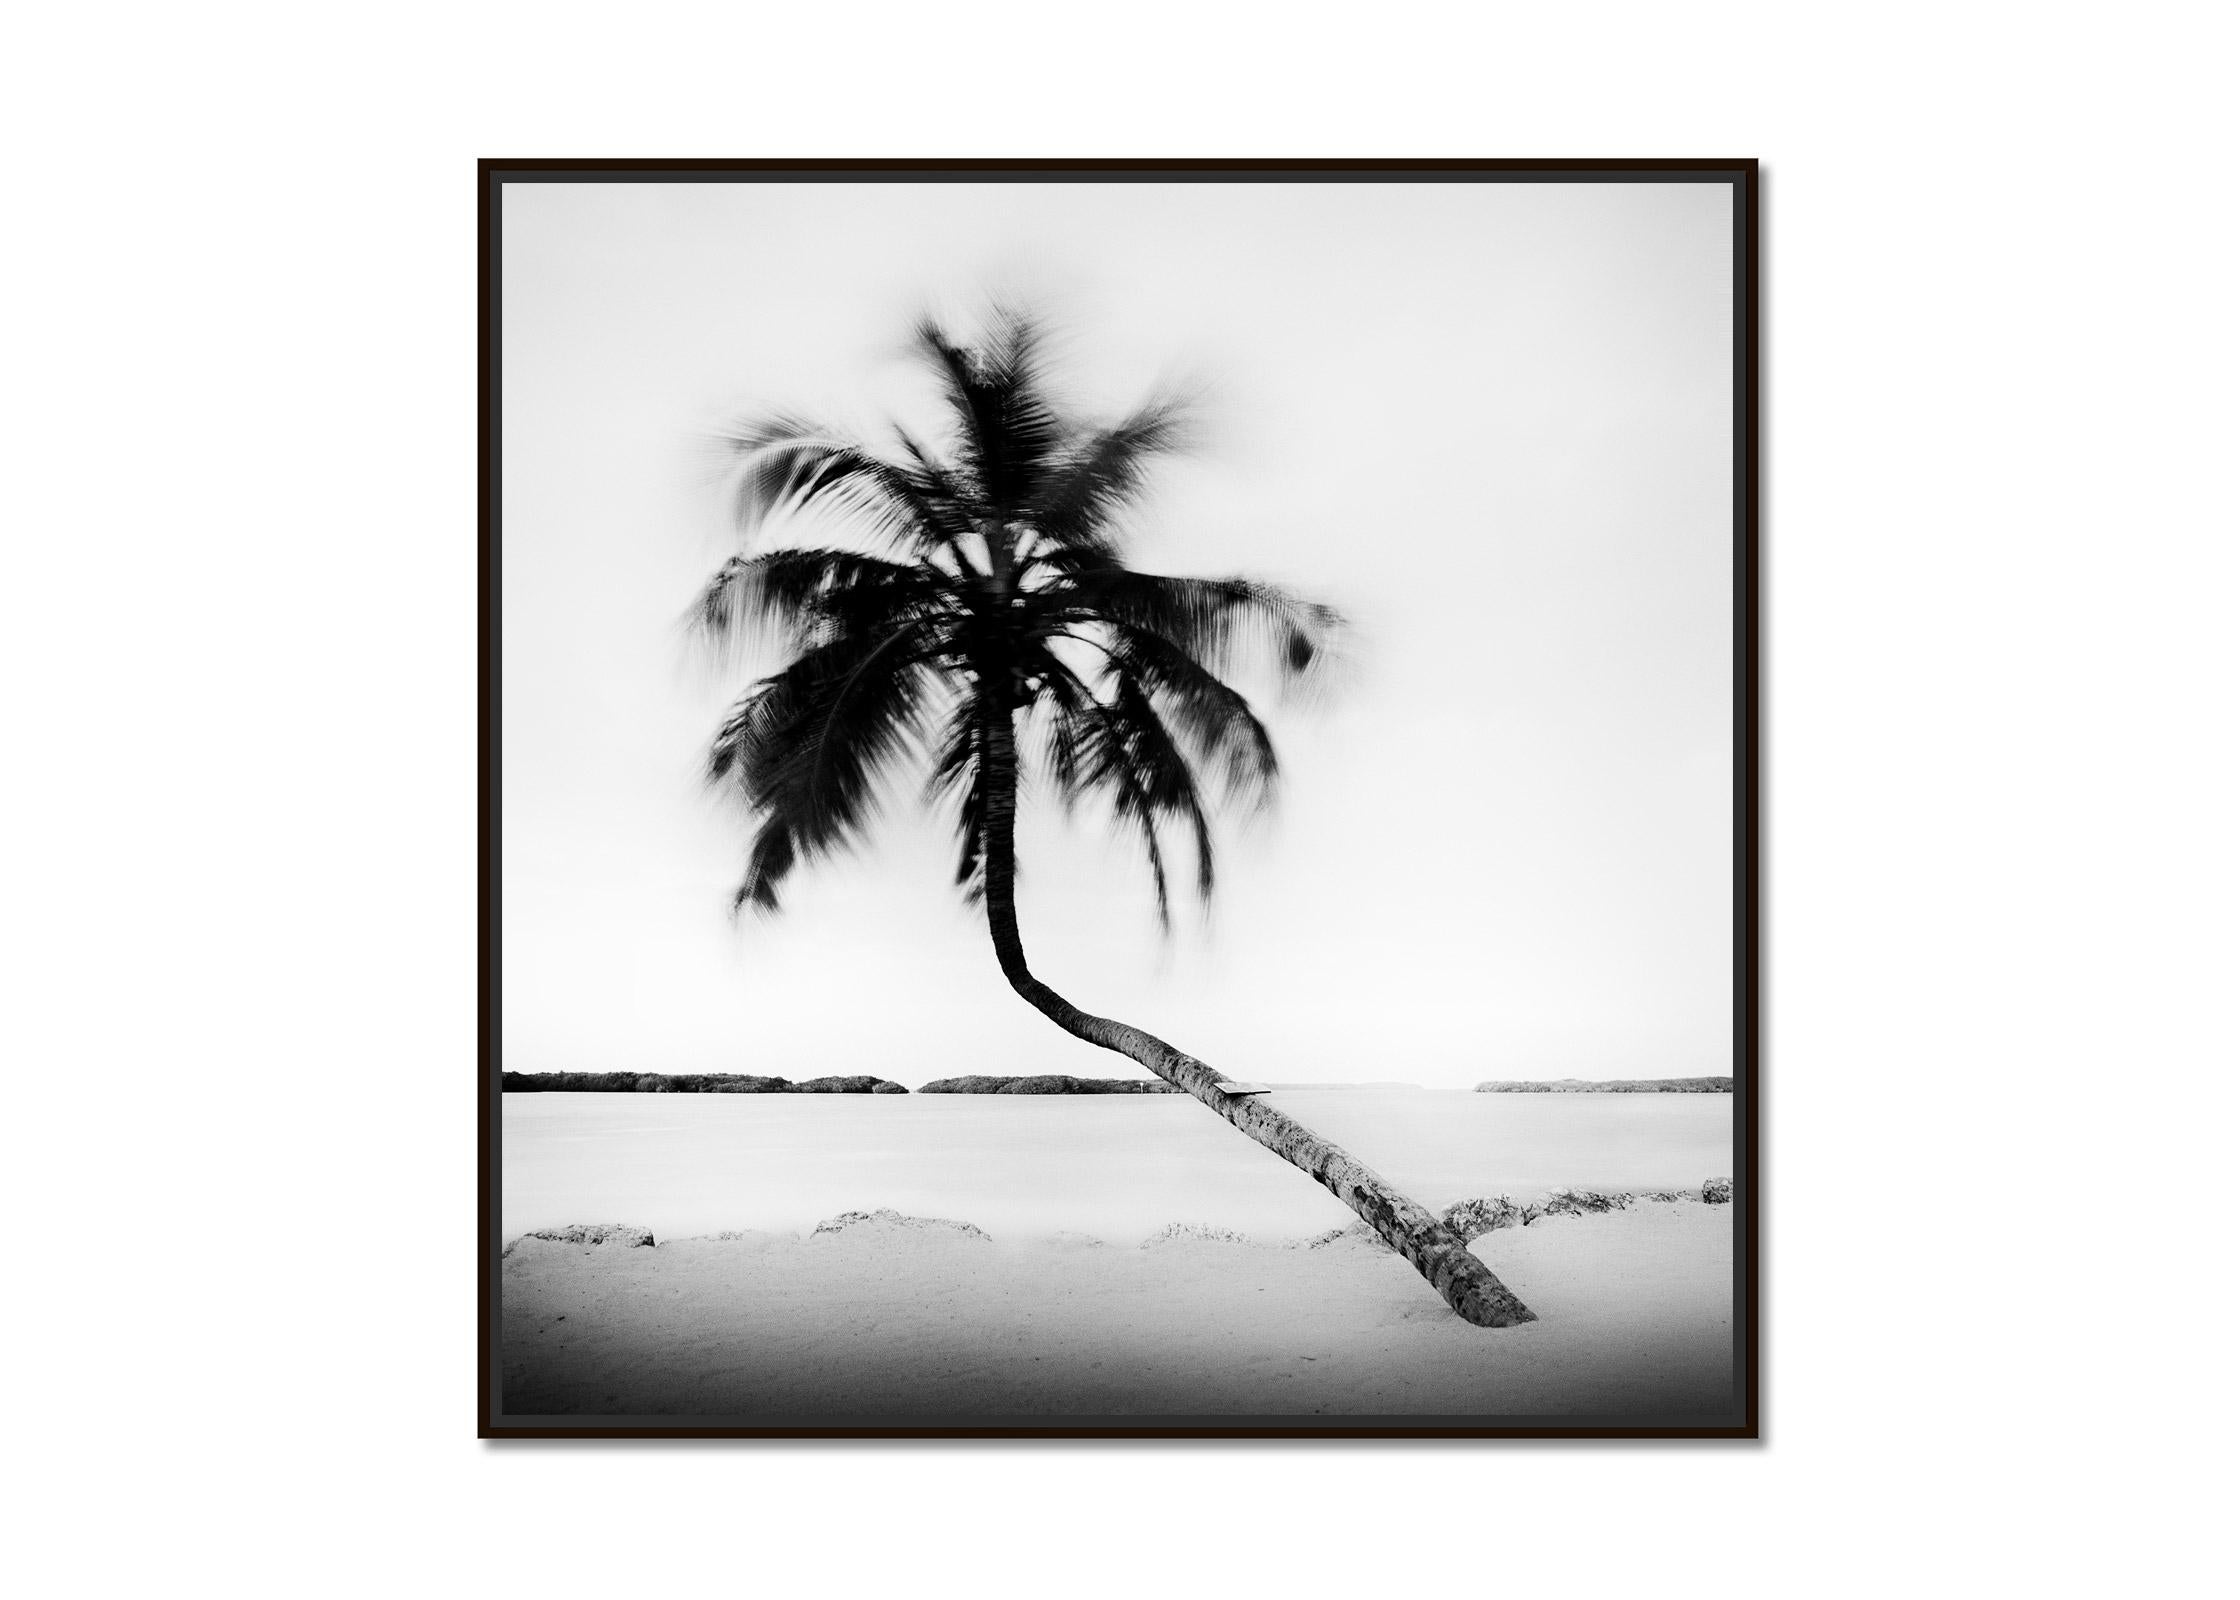 Bent Palm, Beach, Florida, USA, Schwarz-Weiß-Fotografie, Landschaft – Photograph von Gerald Berghammer, Ina Forstinger